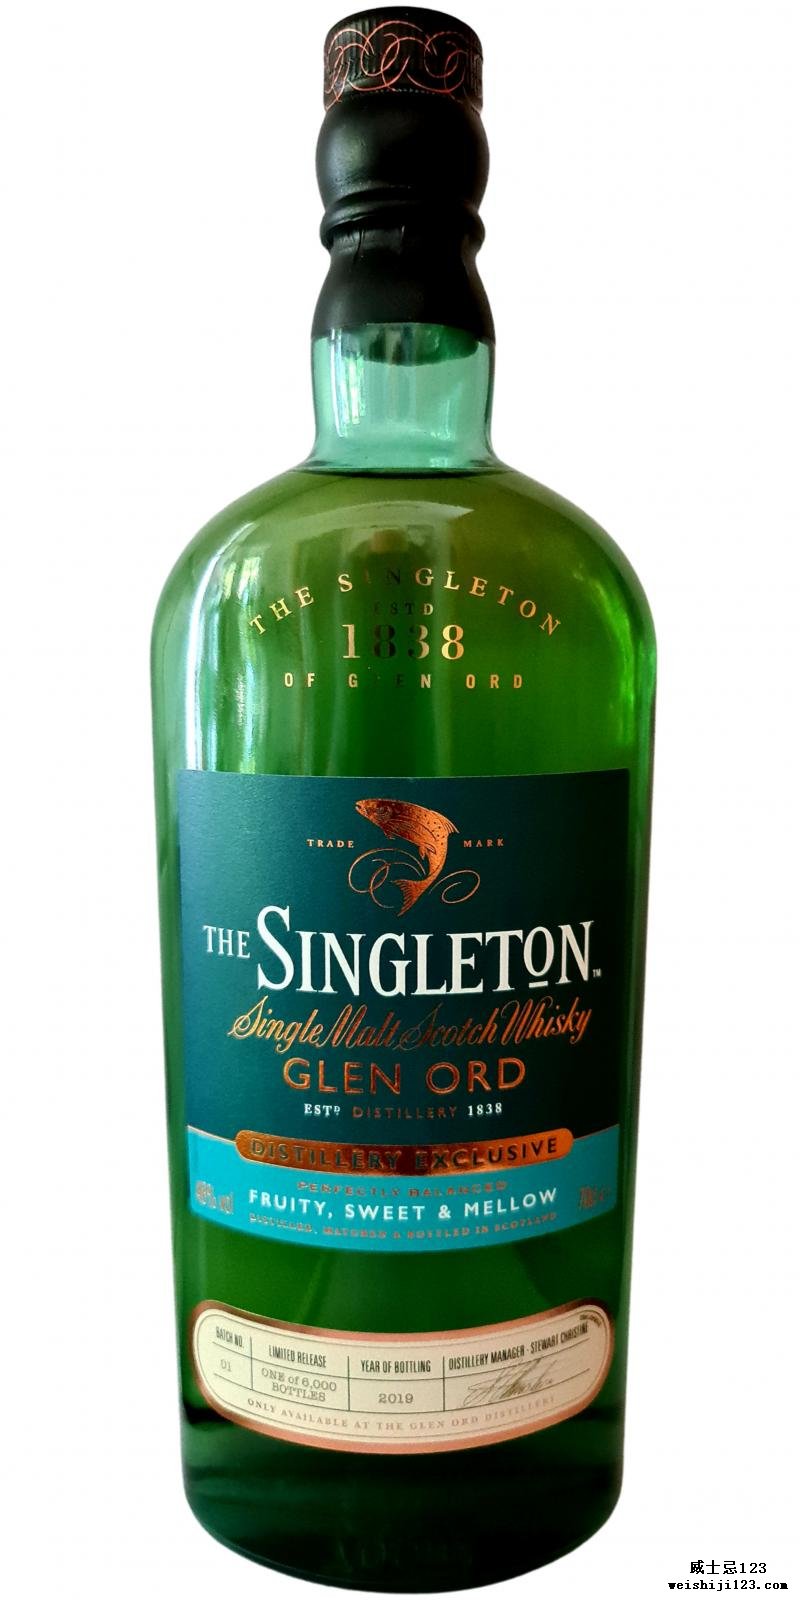 The Singleton of Glen Ord Distillery Exclusive